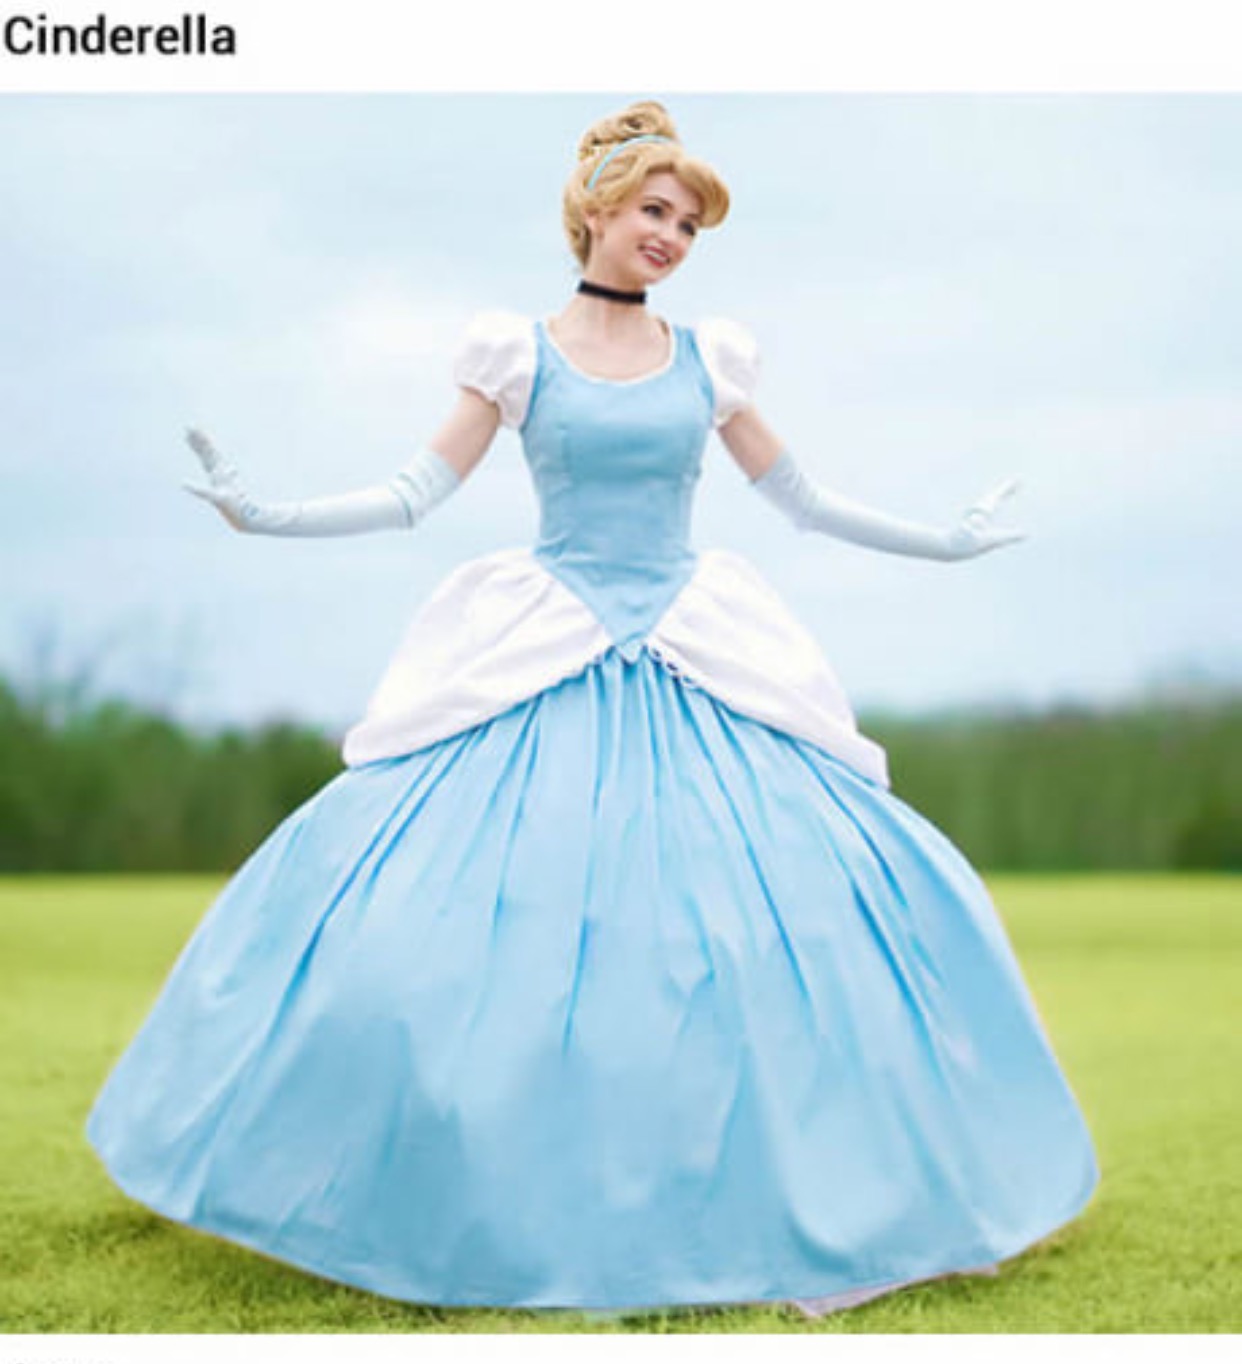 Woman Spends 14K On Disney Princess Trasformation